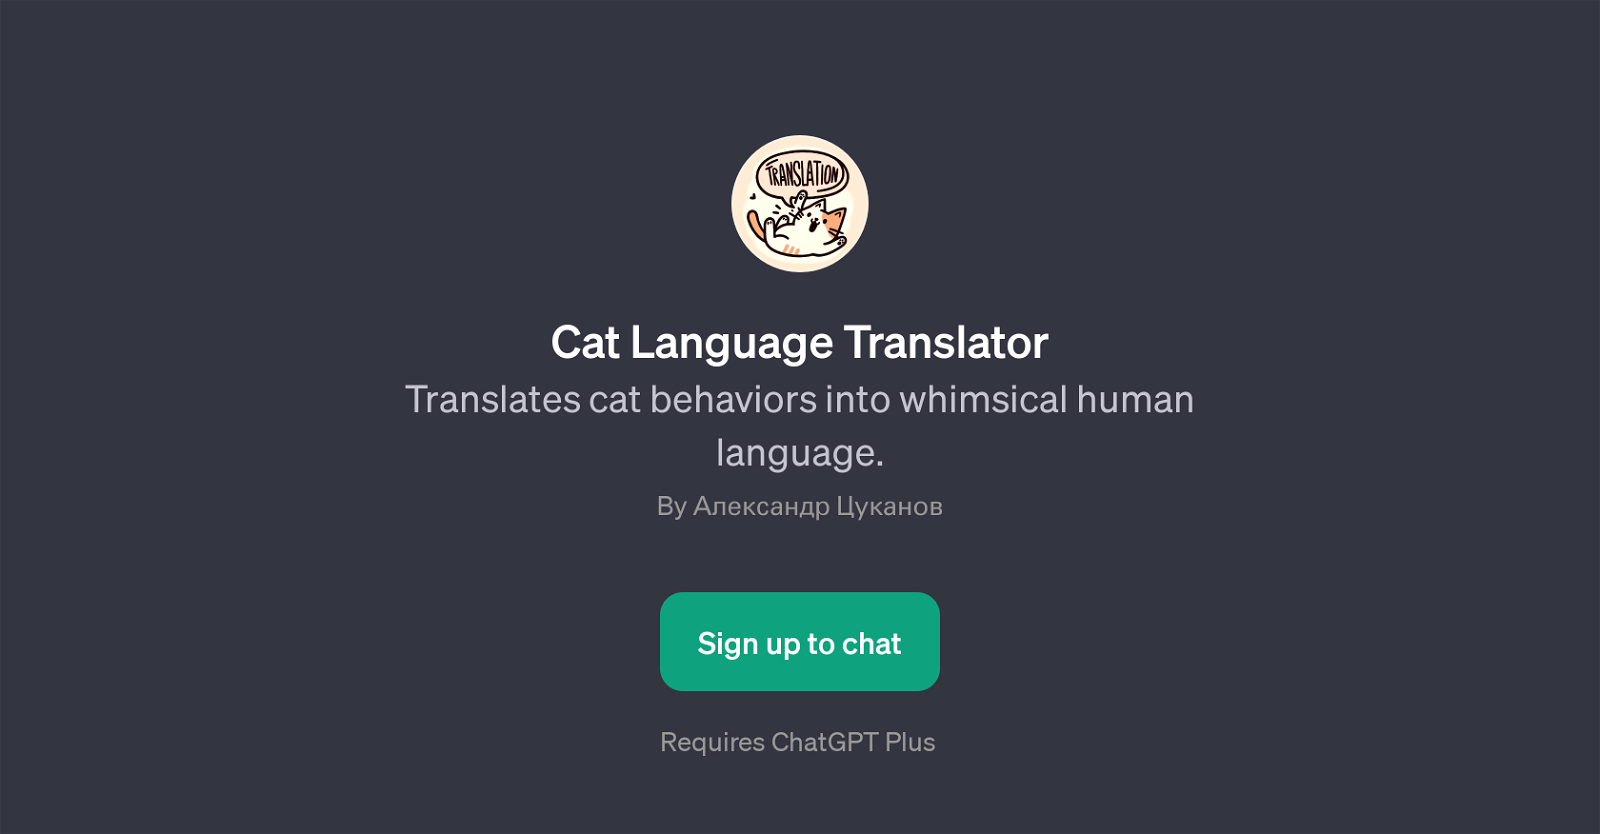 Cat Language Translator website